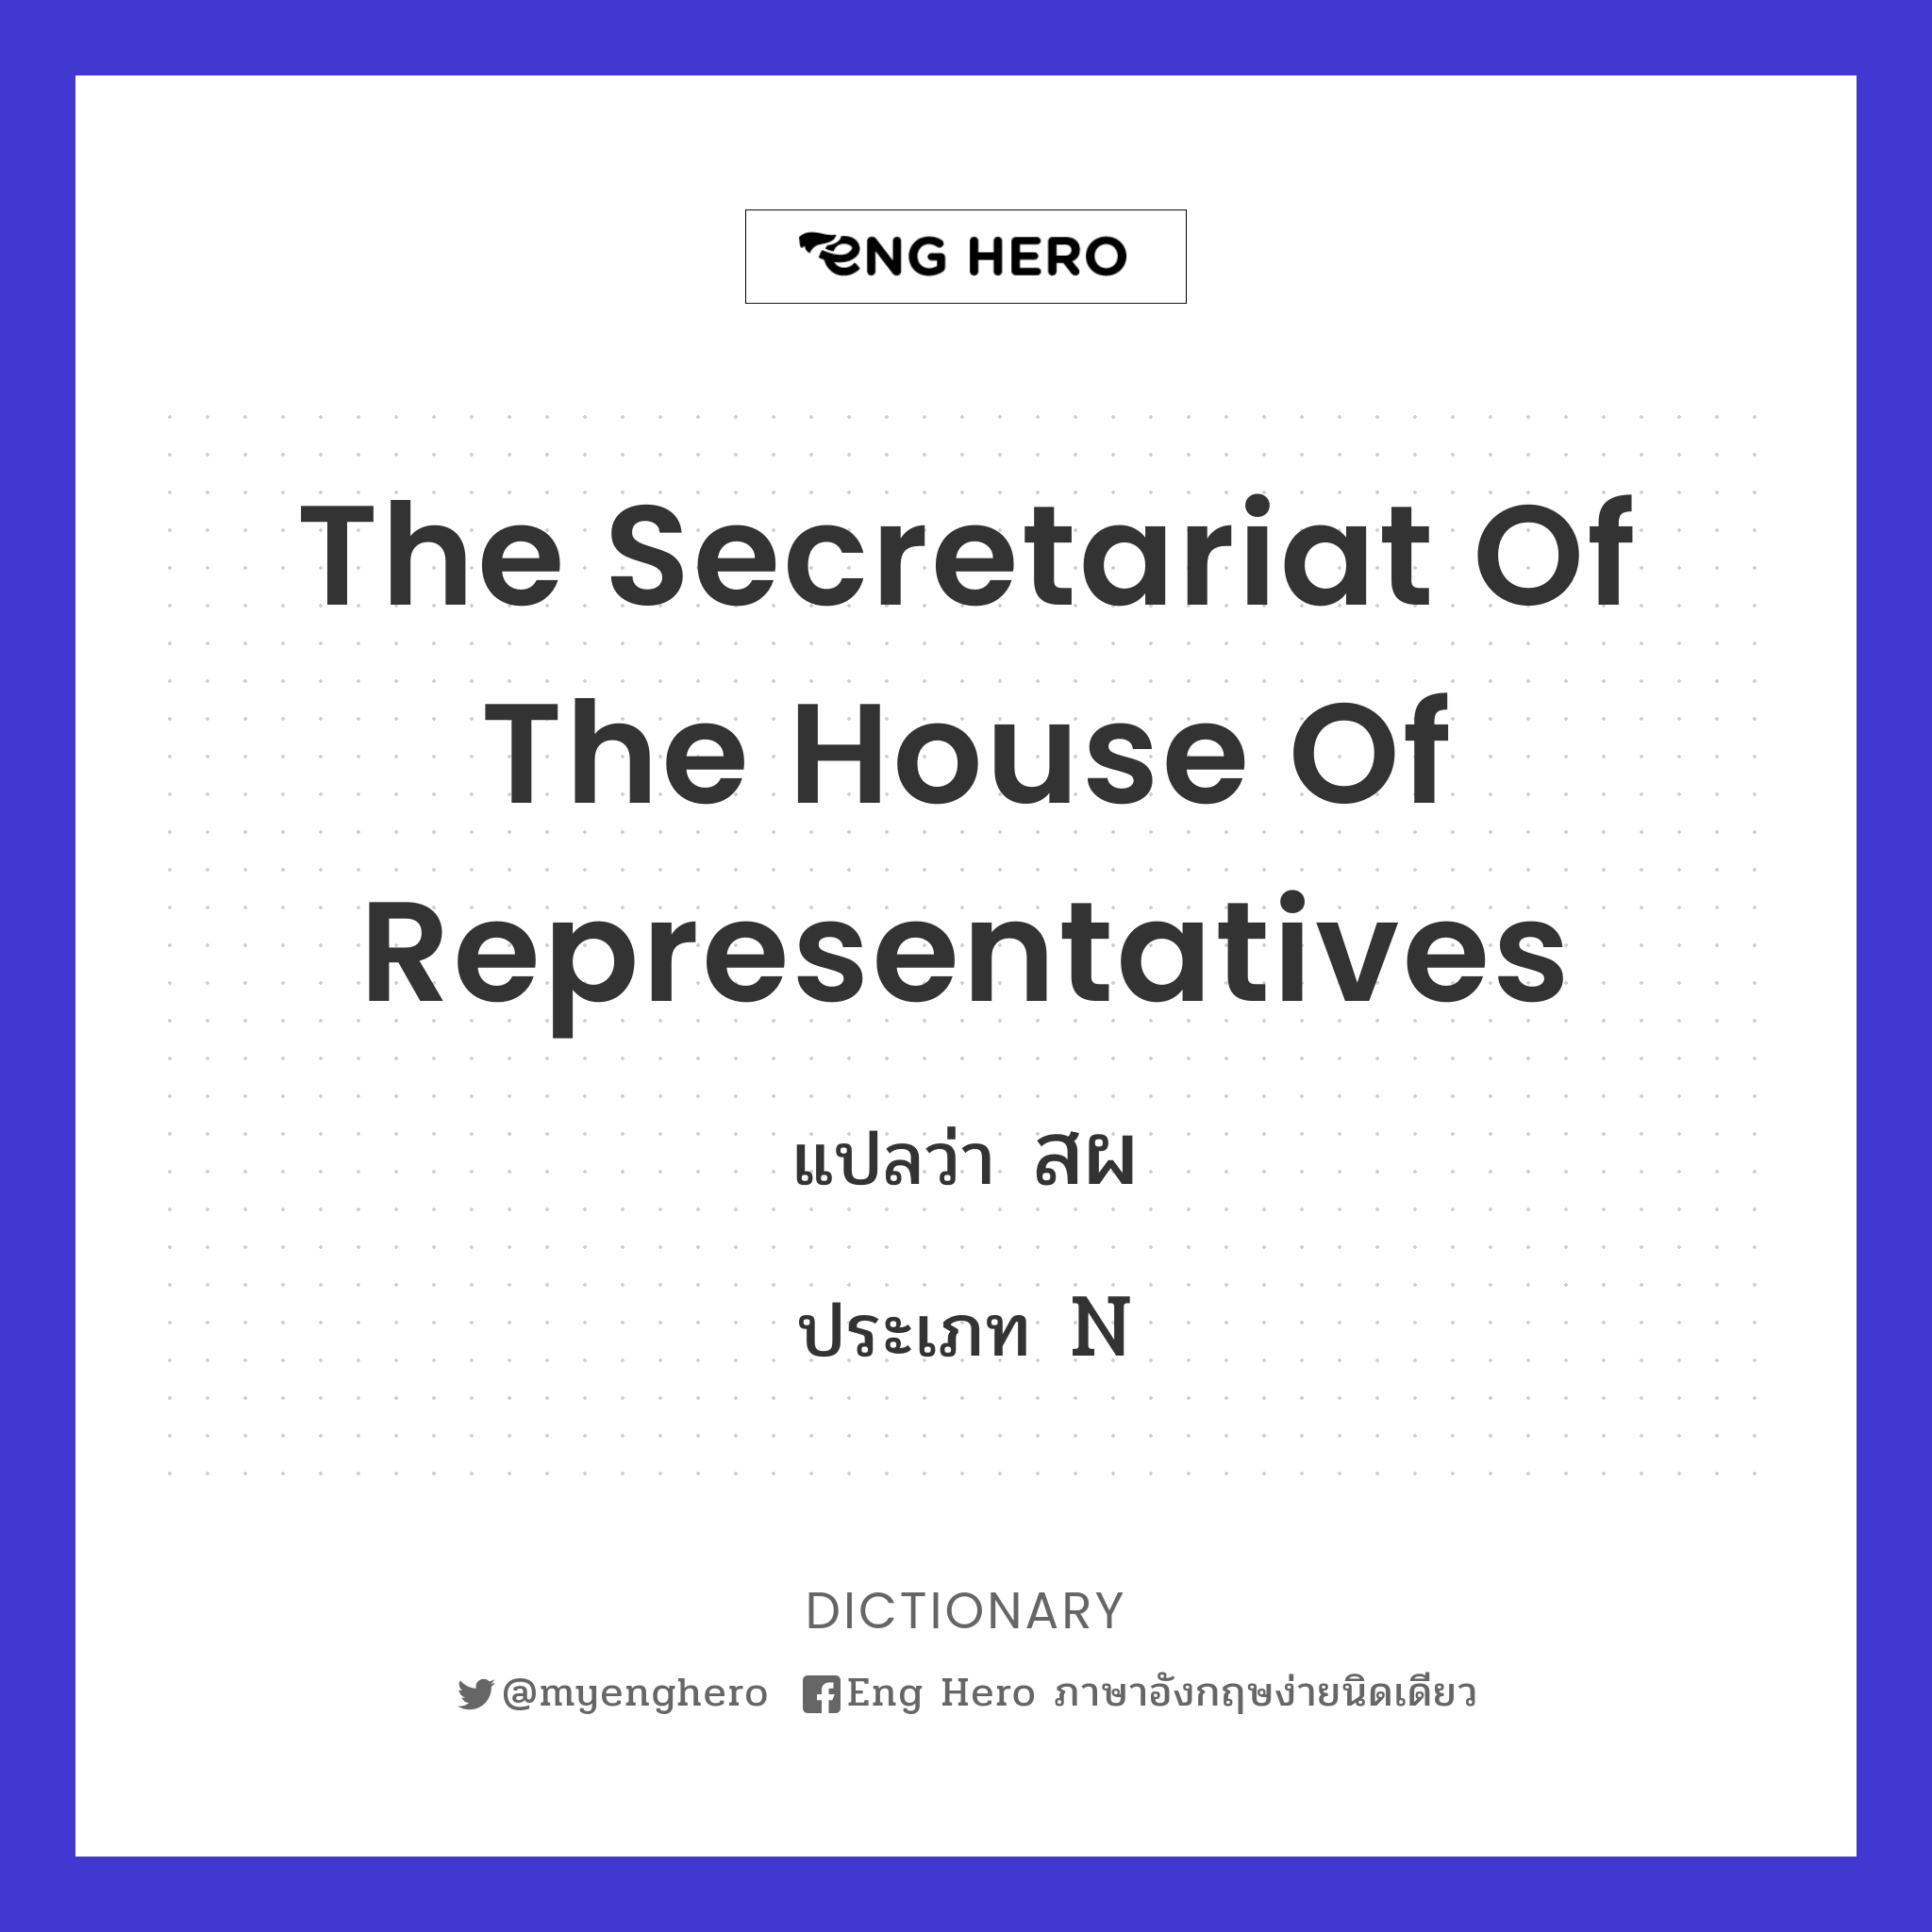 The Secretariat of the House of Representatives